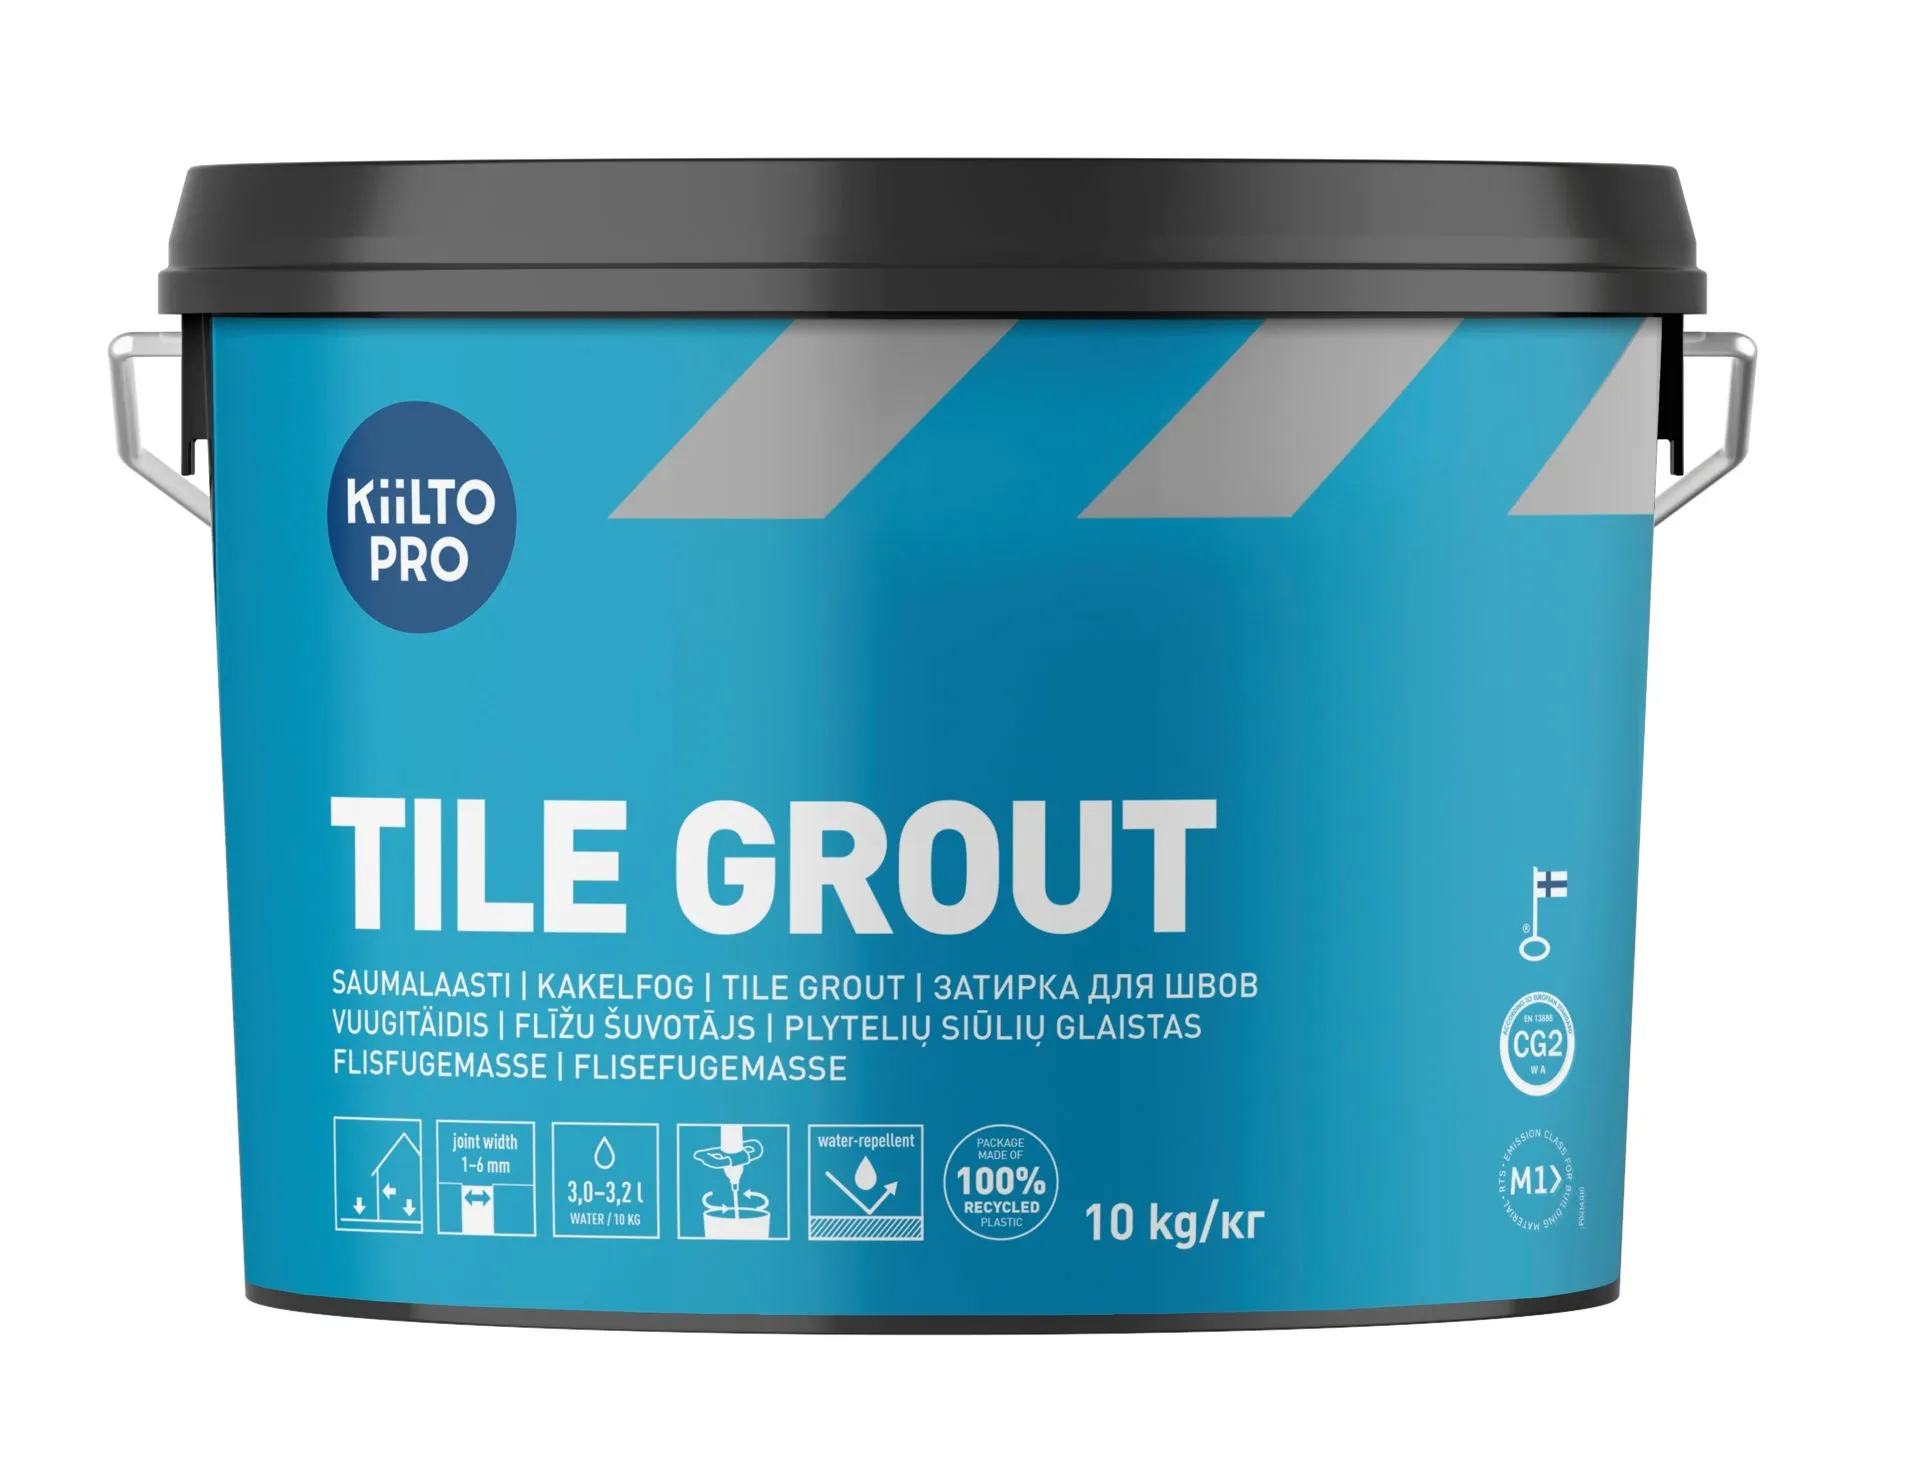 Kiilto Pro Tile grout saumalaasti 40 concrete 10 kg